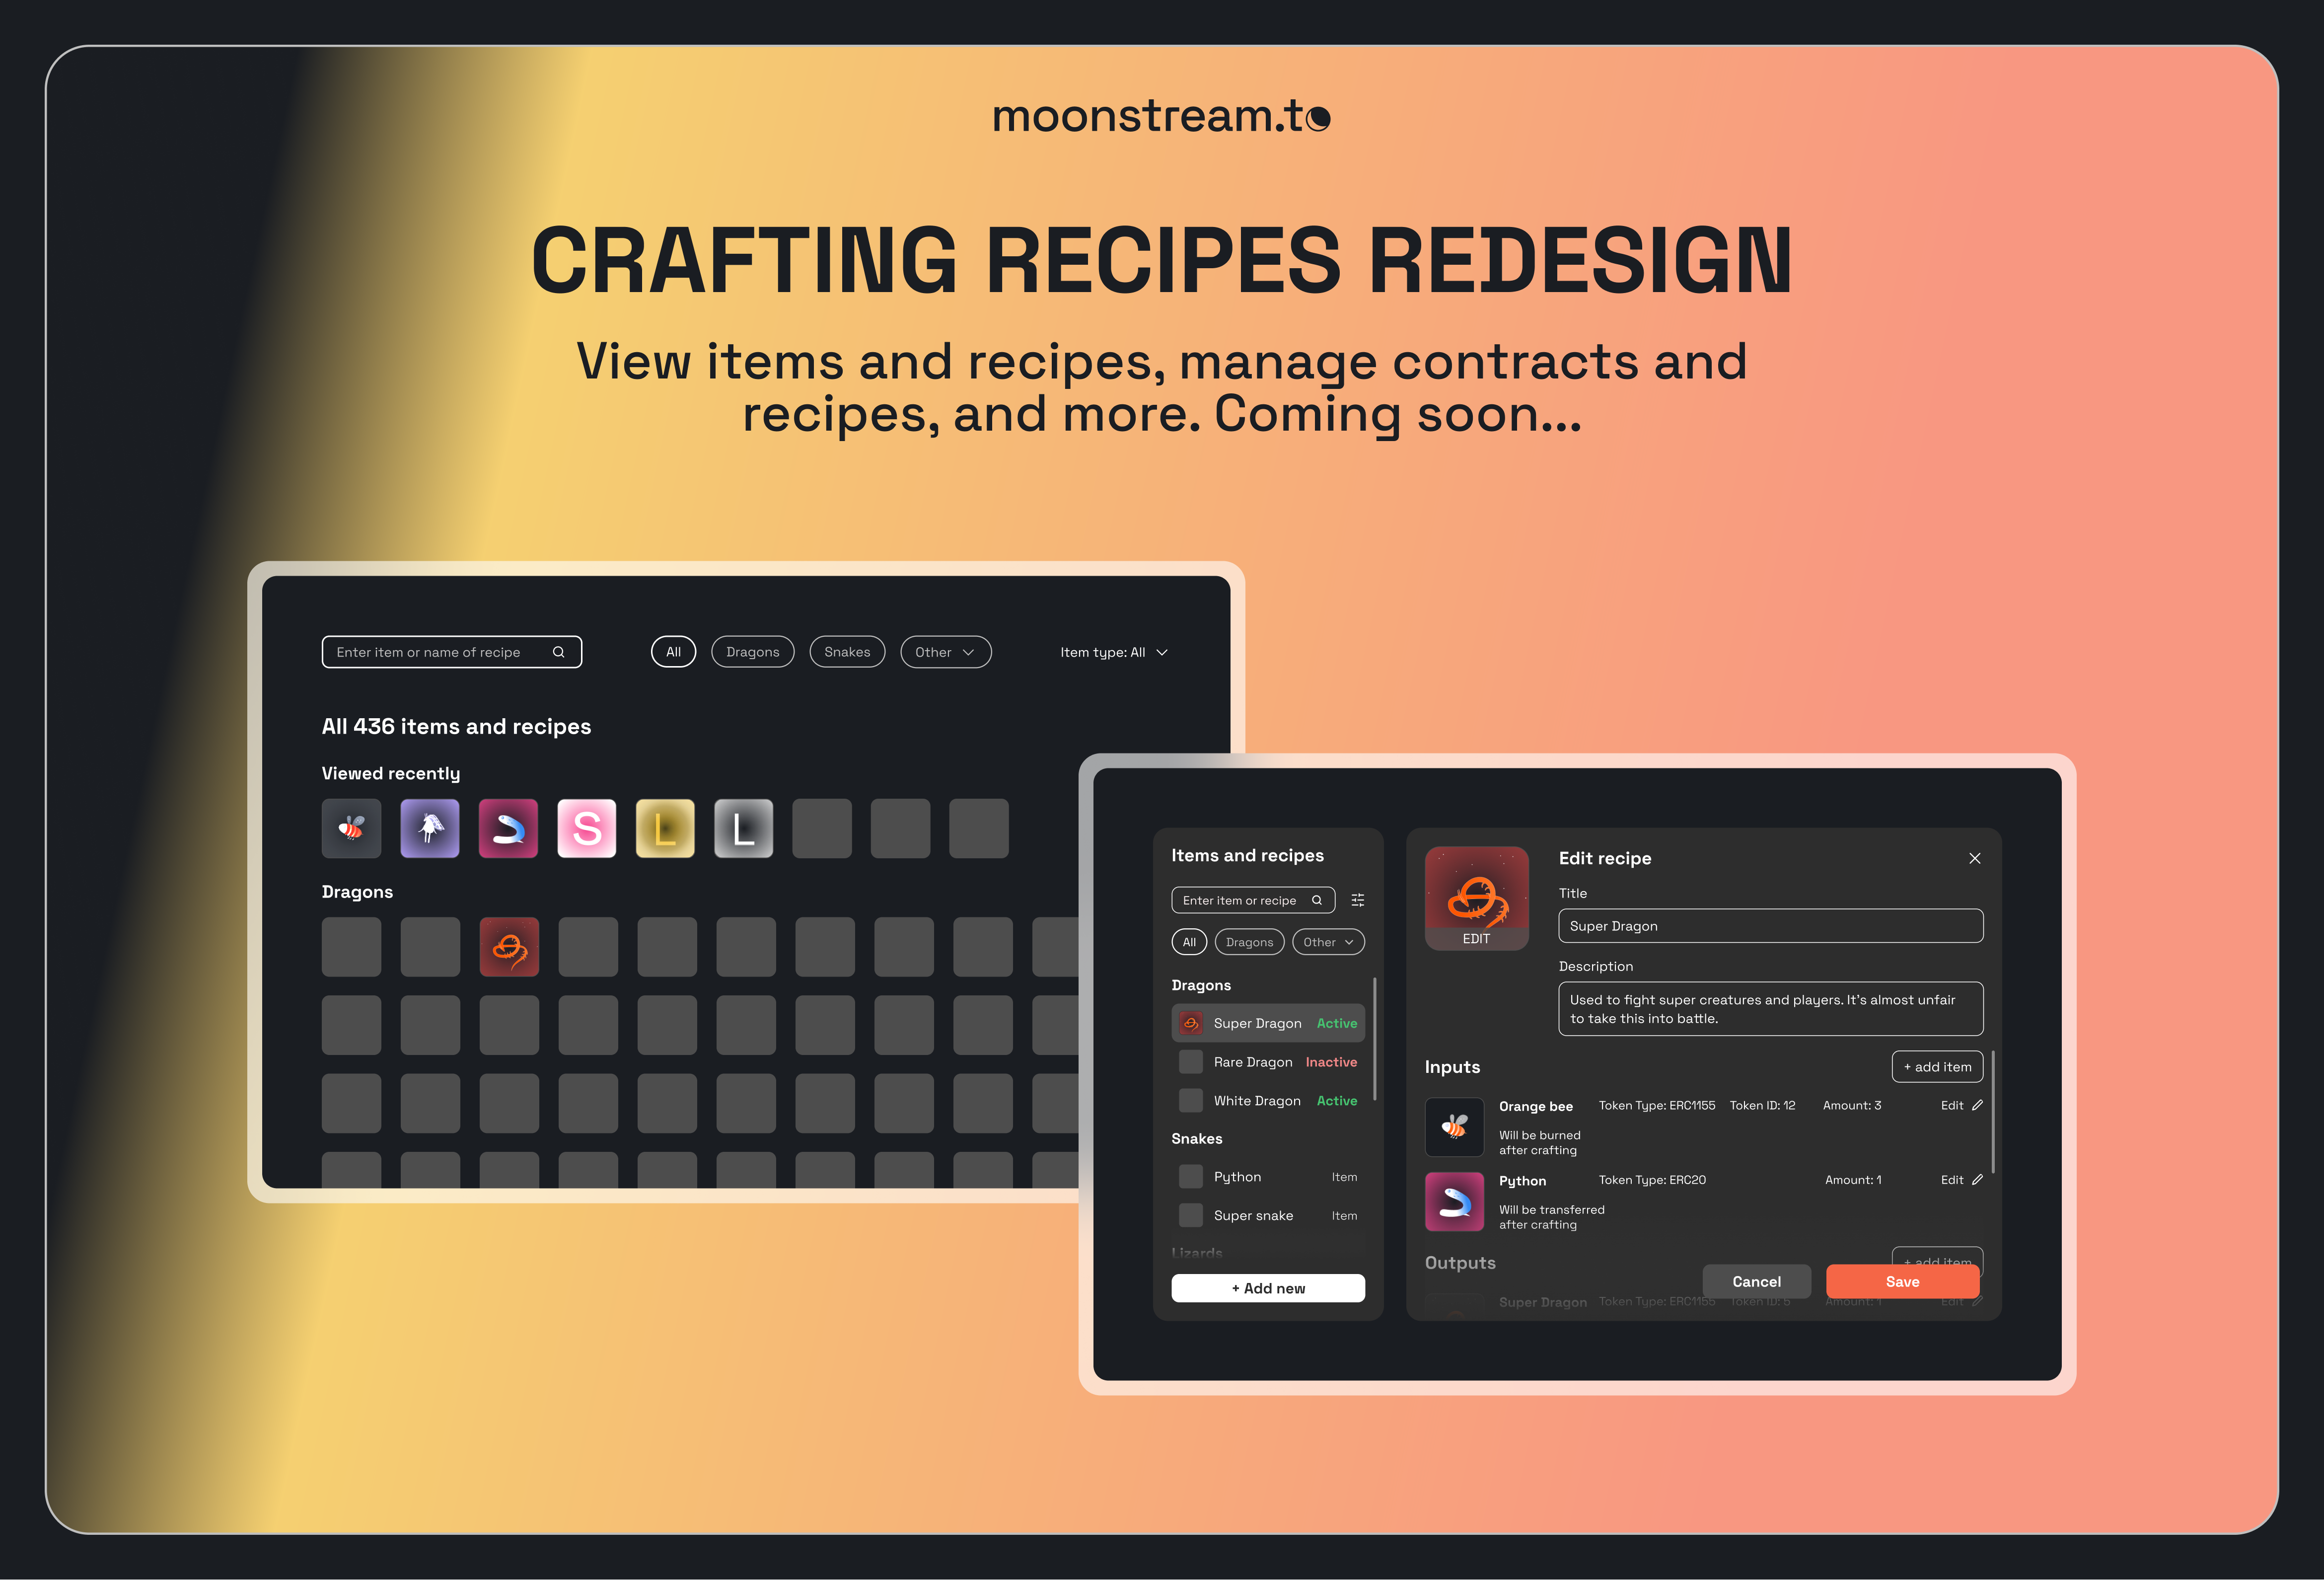 Crafting recipes design update